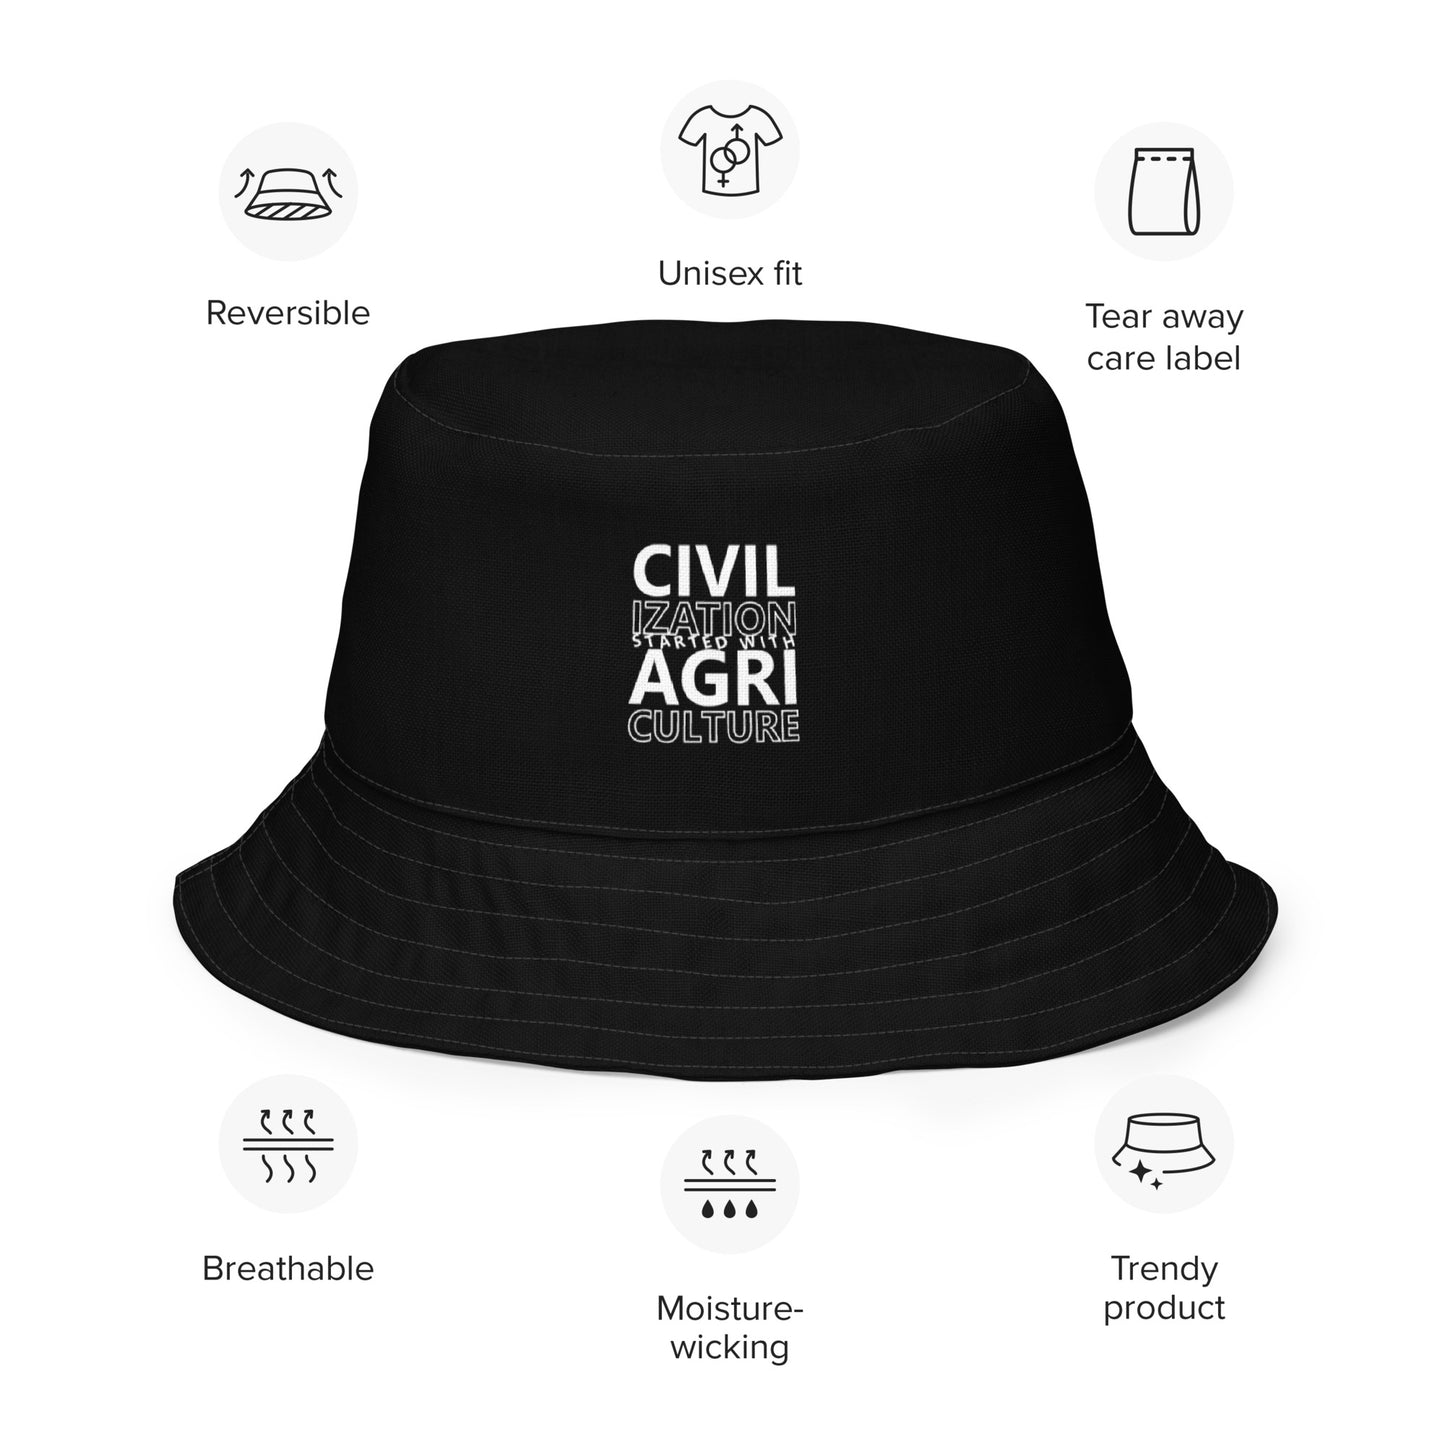 CIVILIZATION Reversible bucket hat